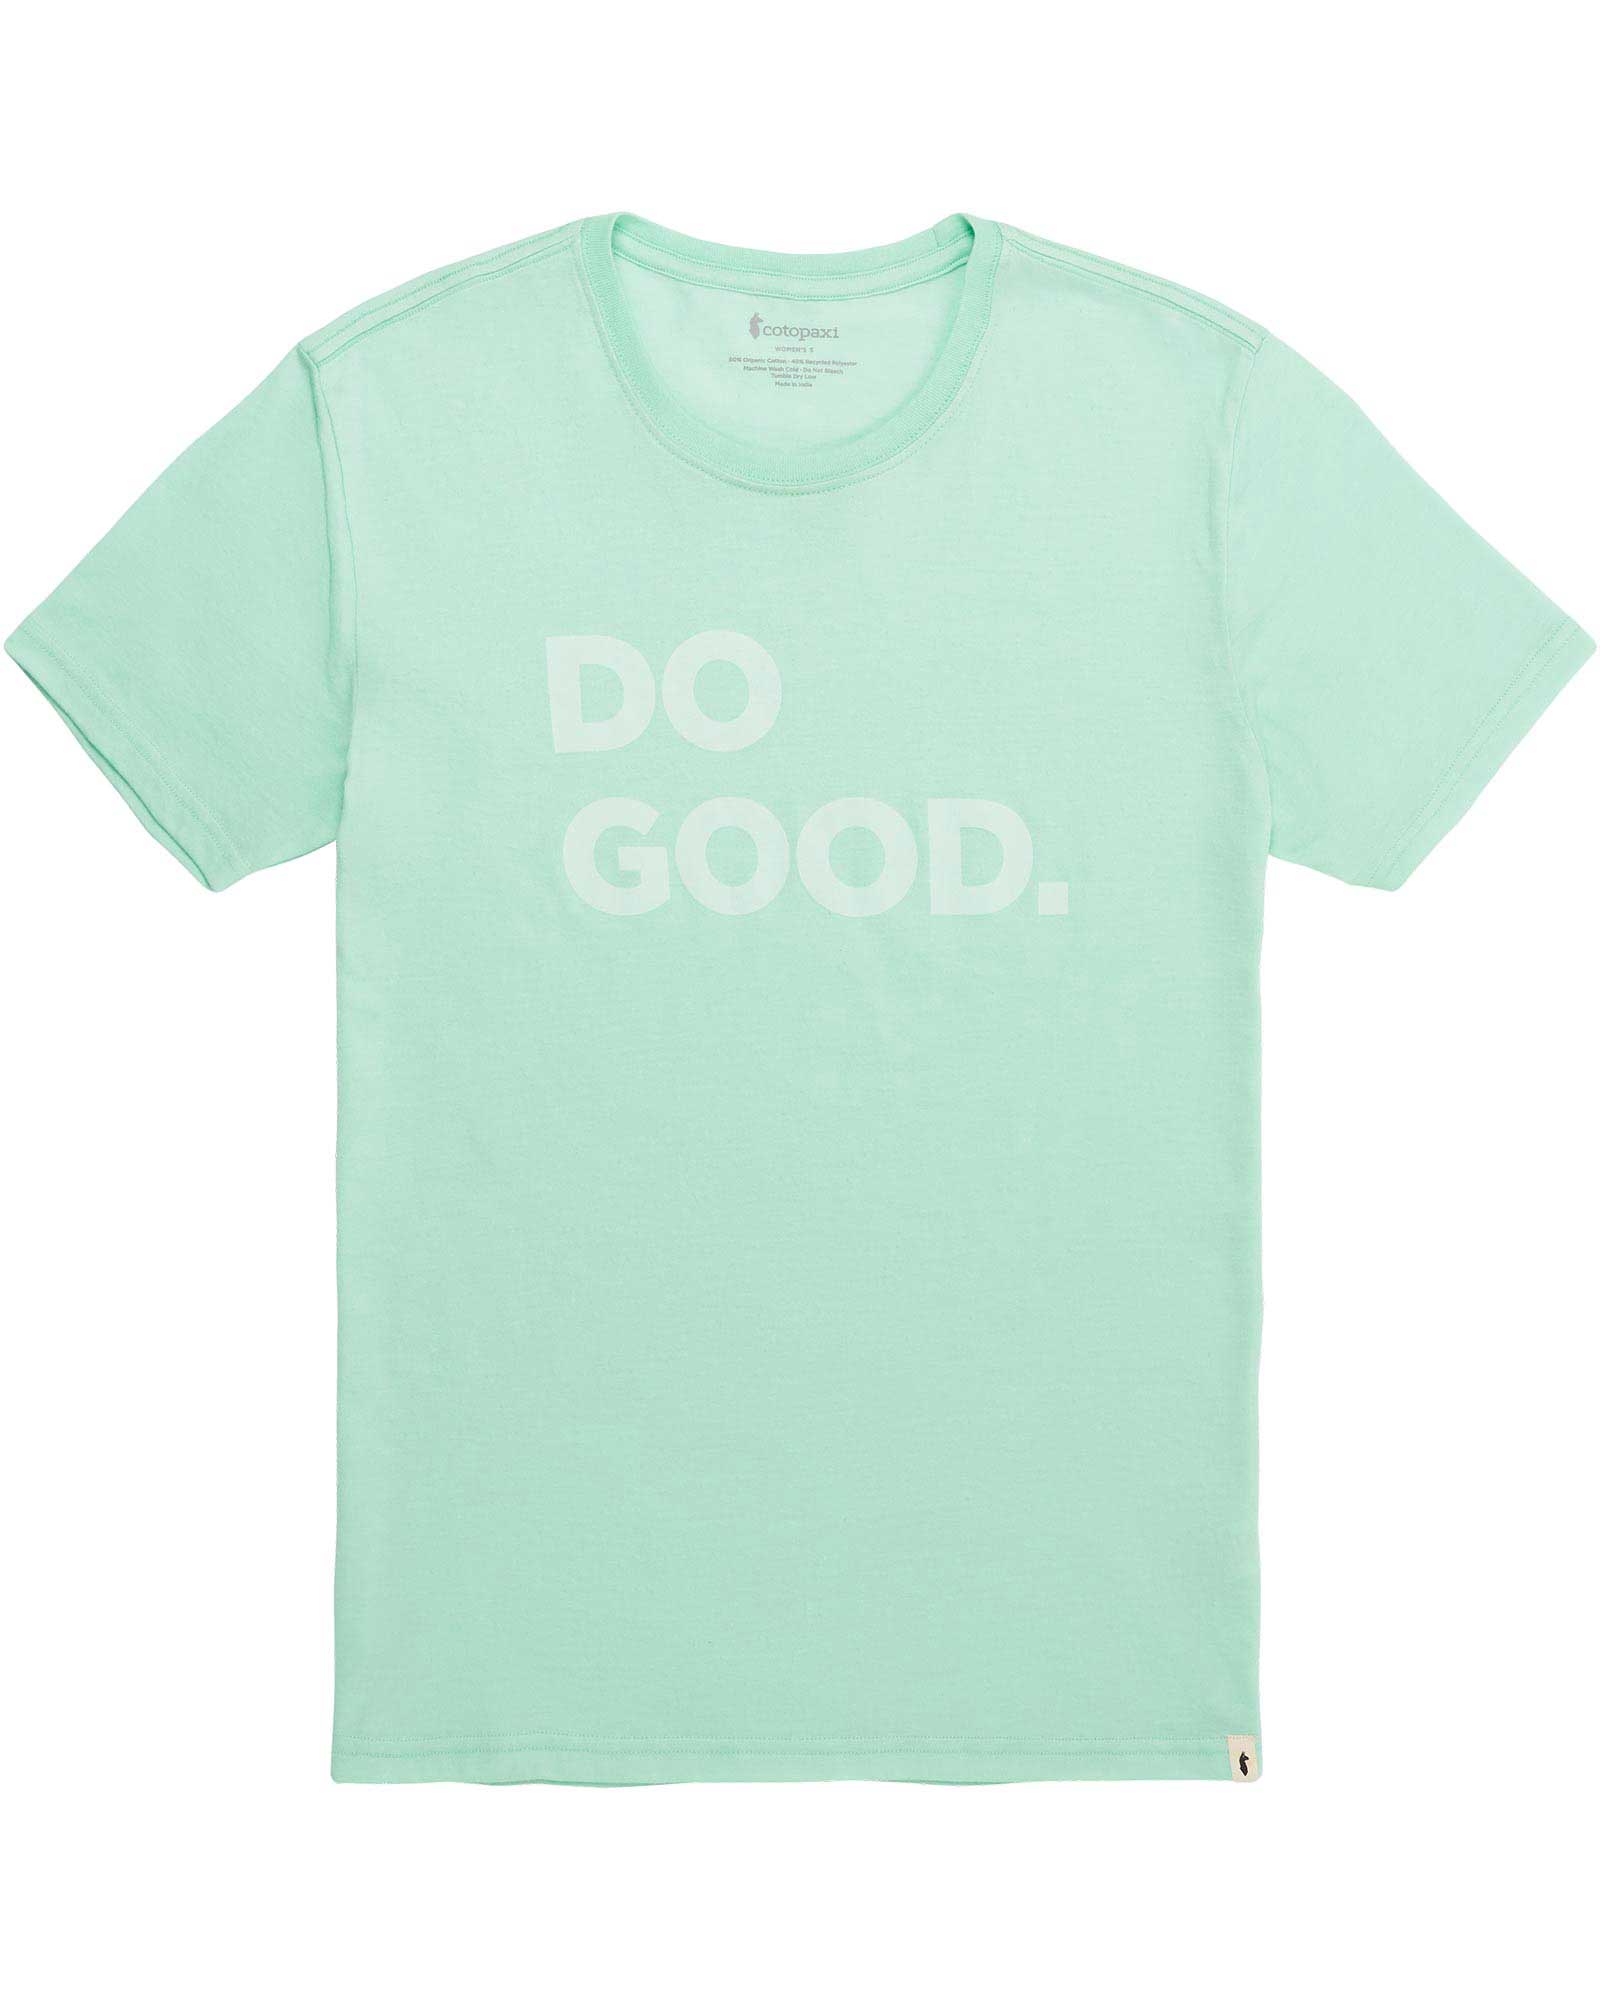 Cotopaxi Do Good Women’s T Shirt - Agave L